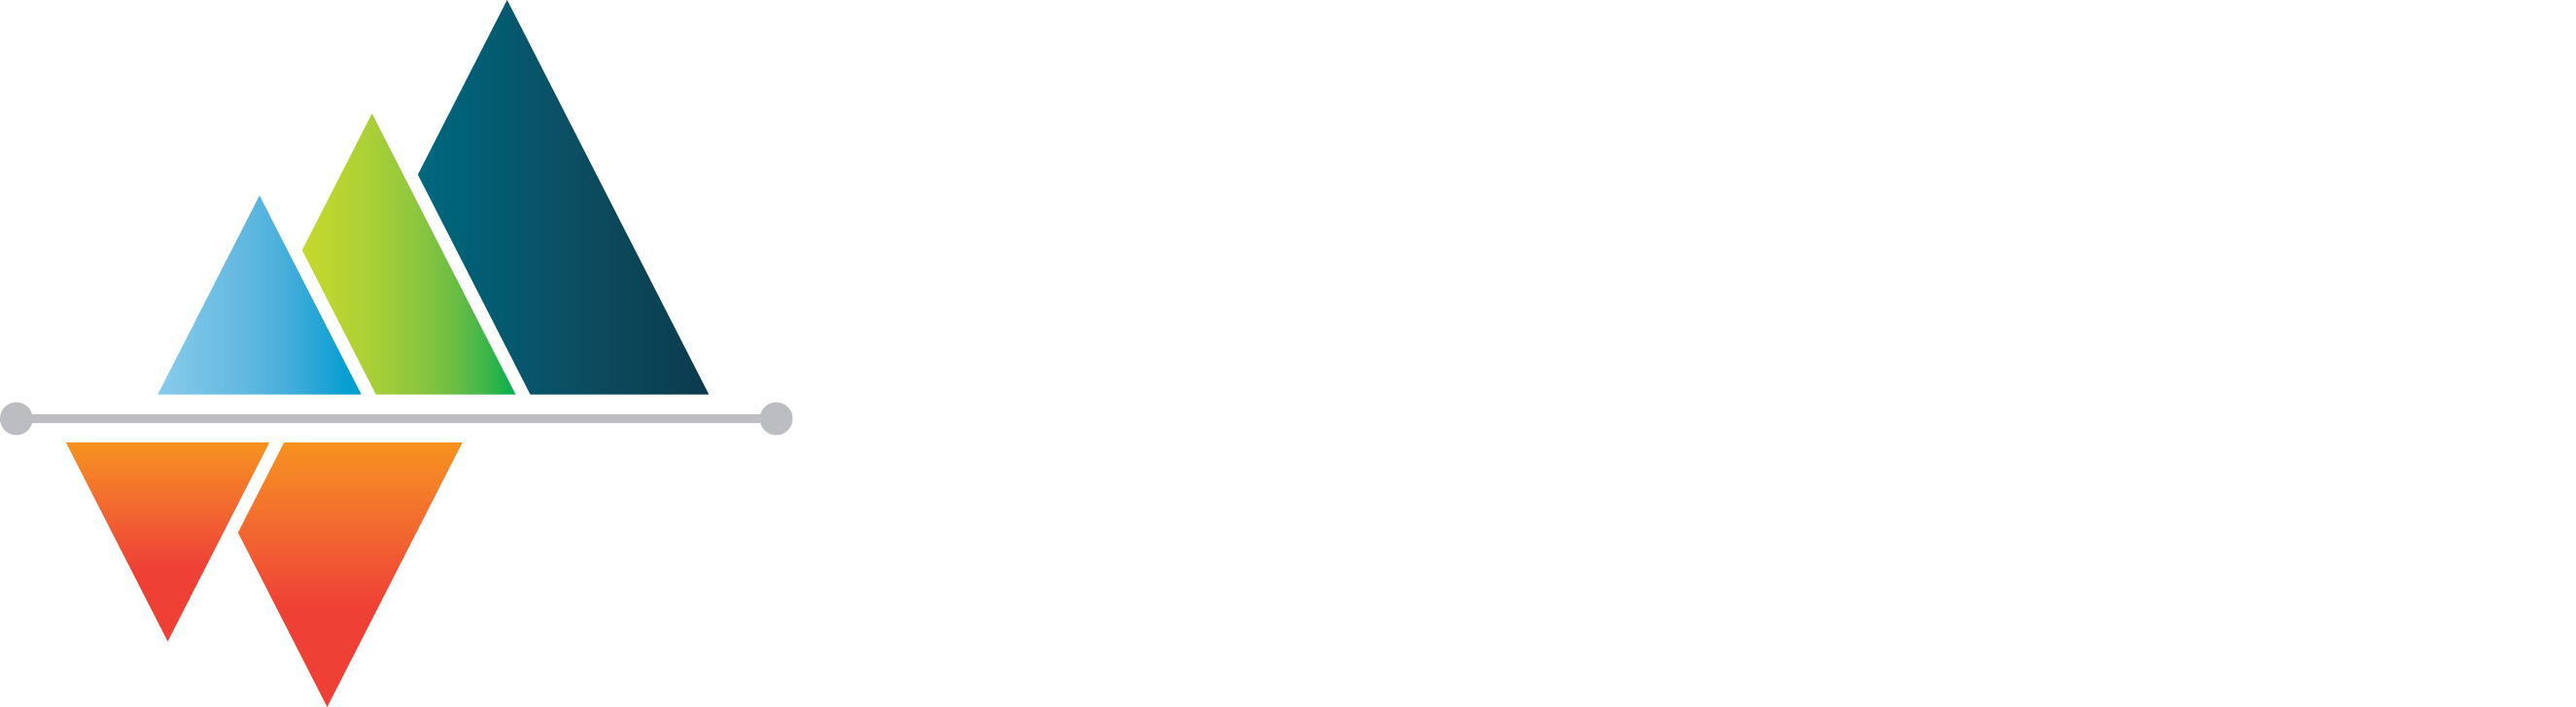 B2BToolbox Logo